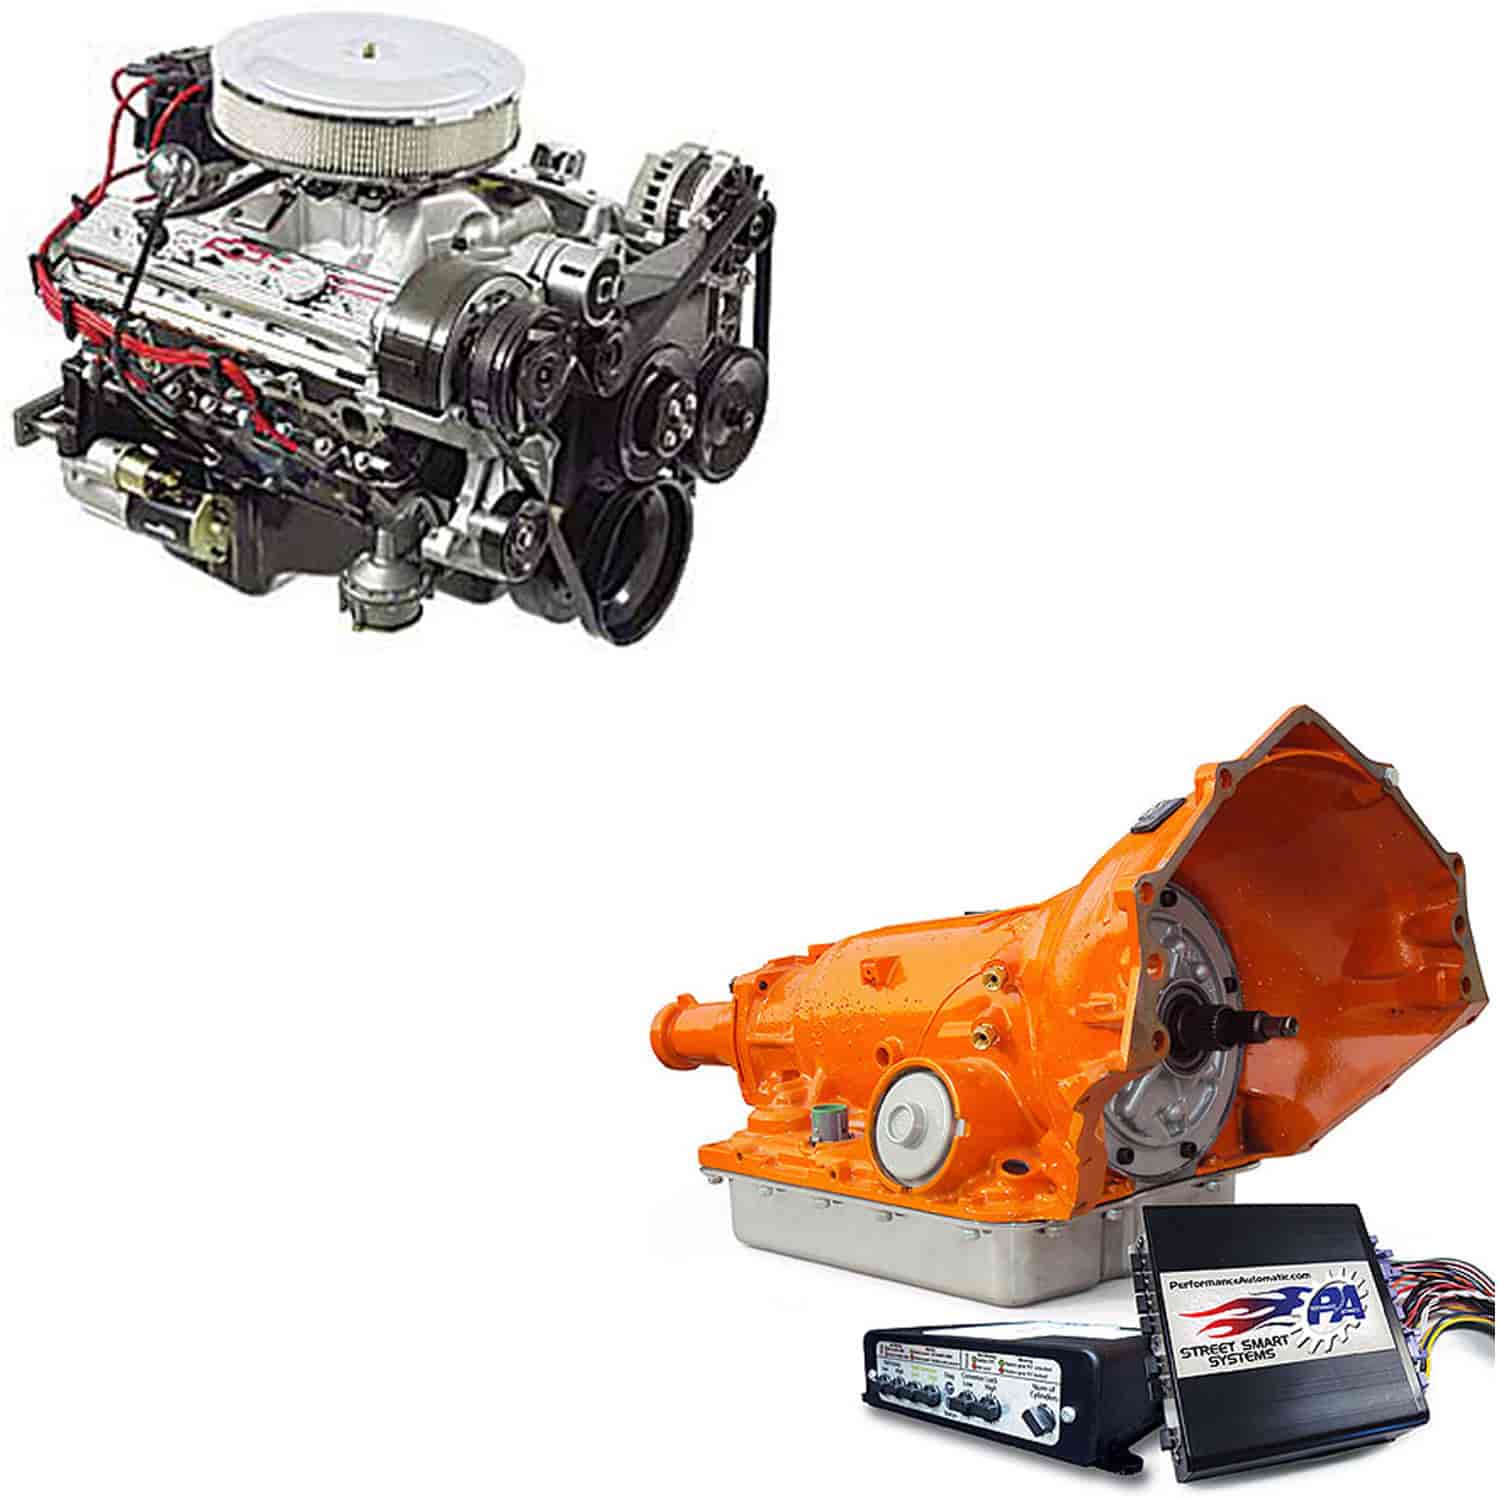 350 HO Turn-Key Engine and 4L60E Trans Kit